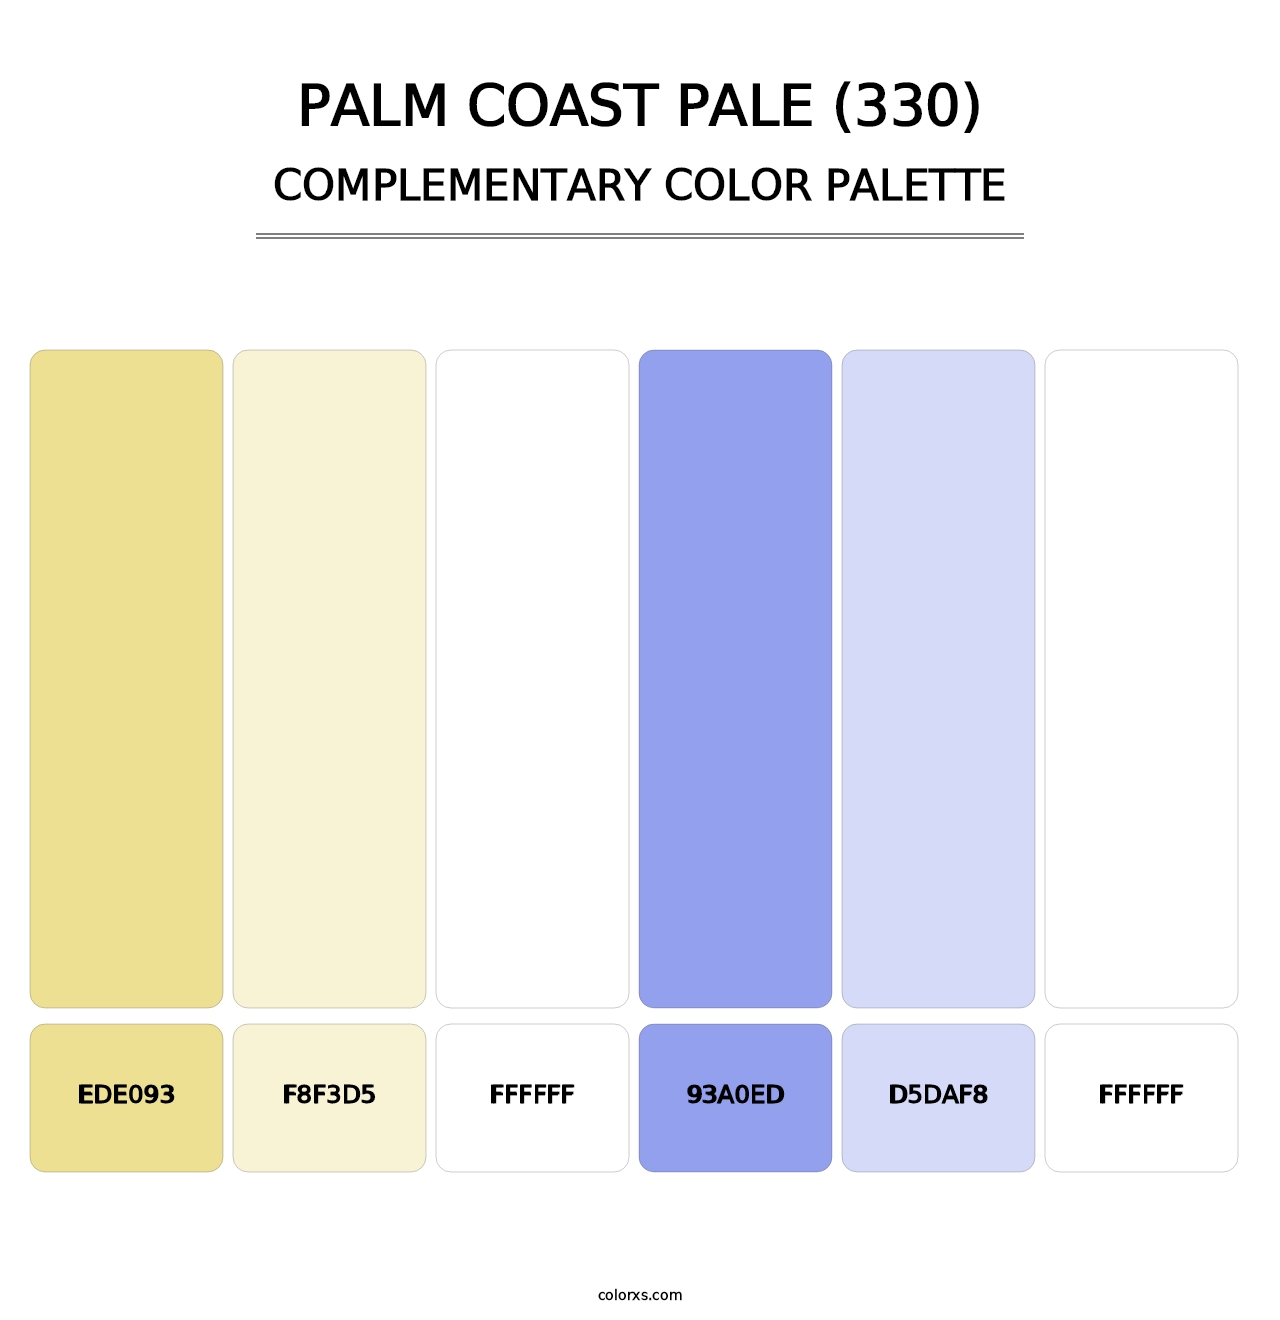 Palm Coast Pale (330) - Complementary Color Palette